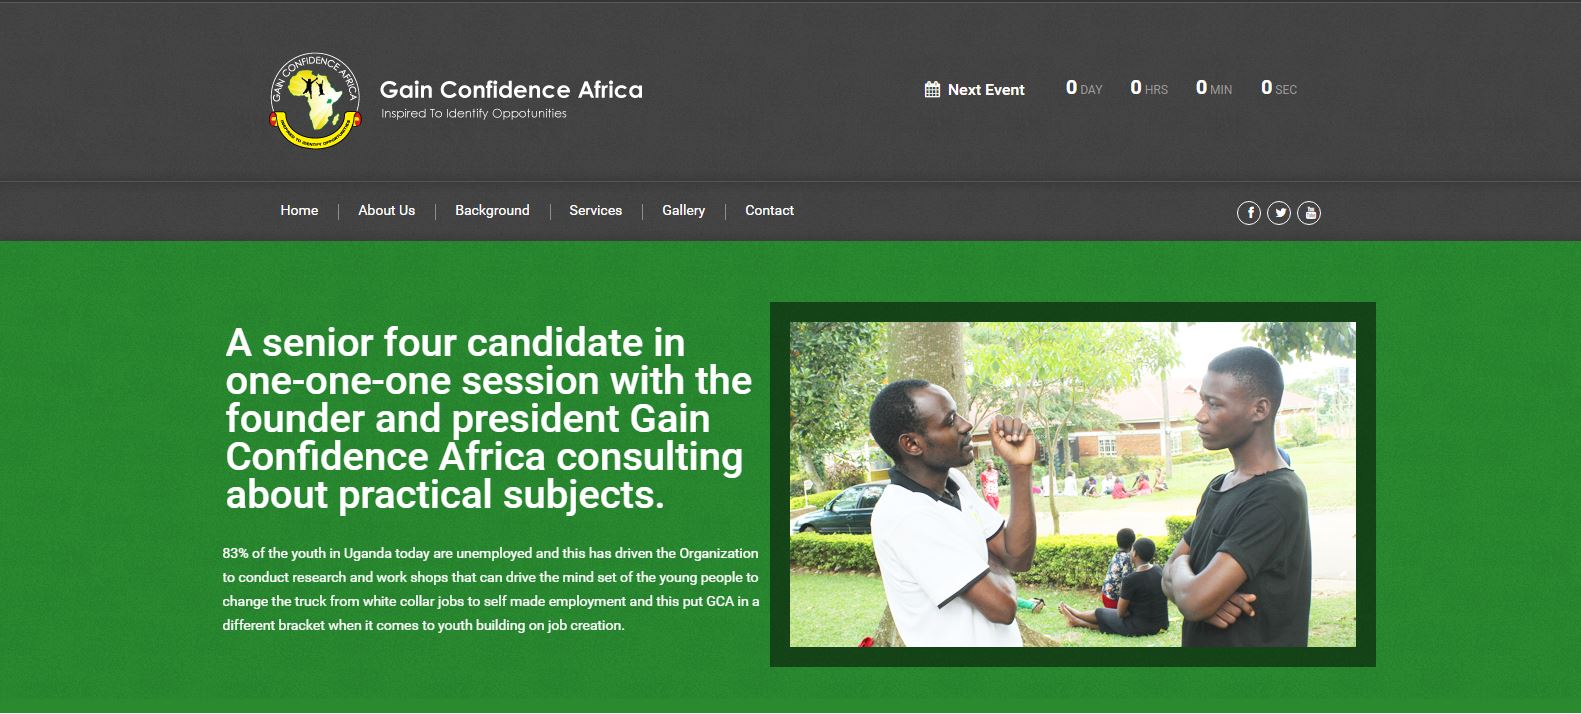 Gain Confidence Africa